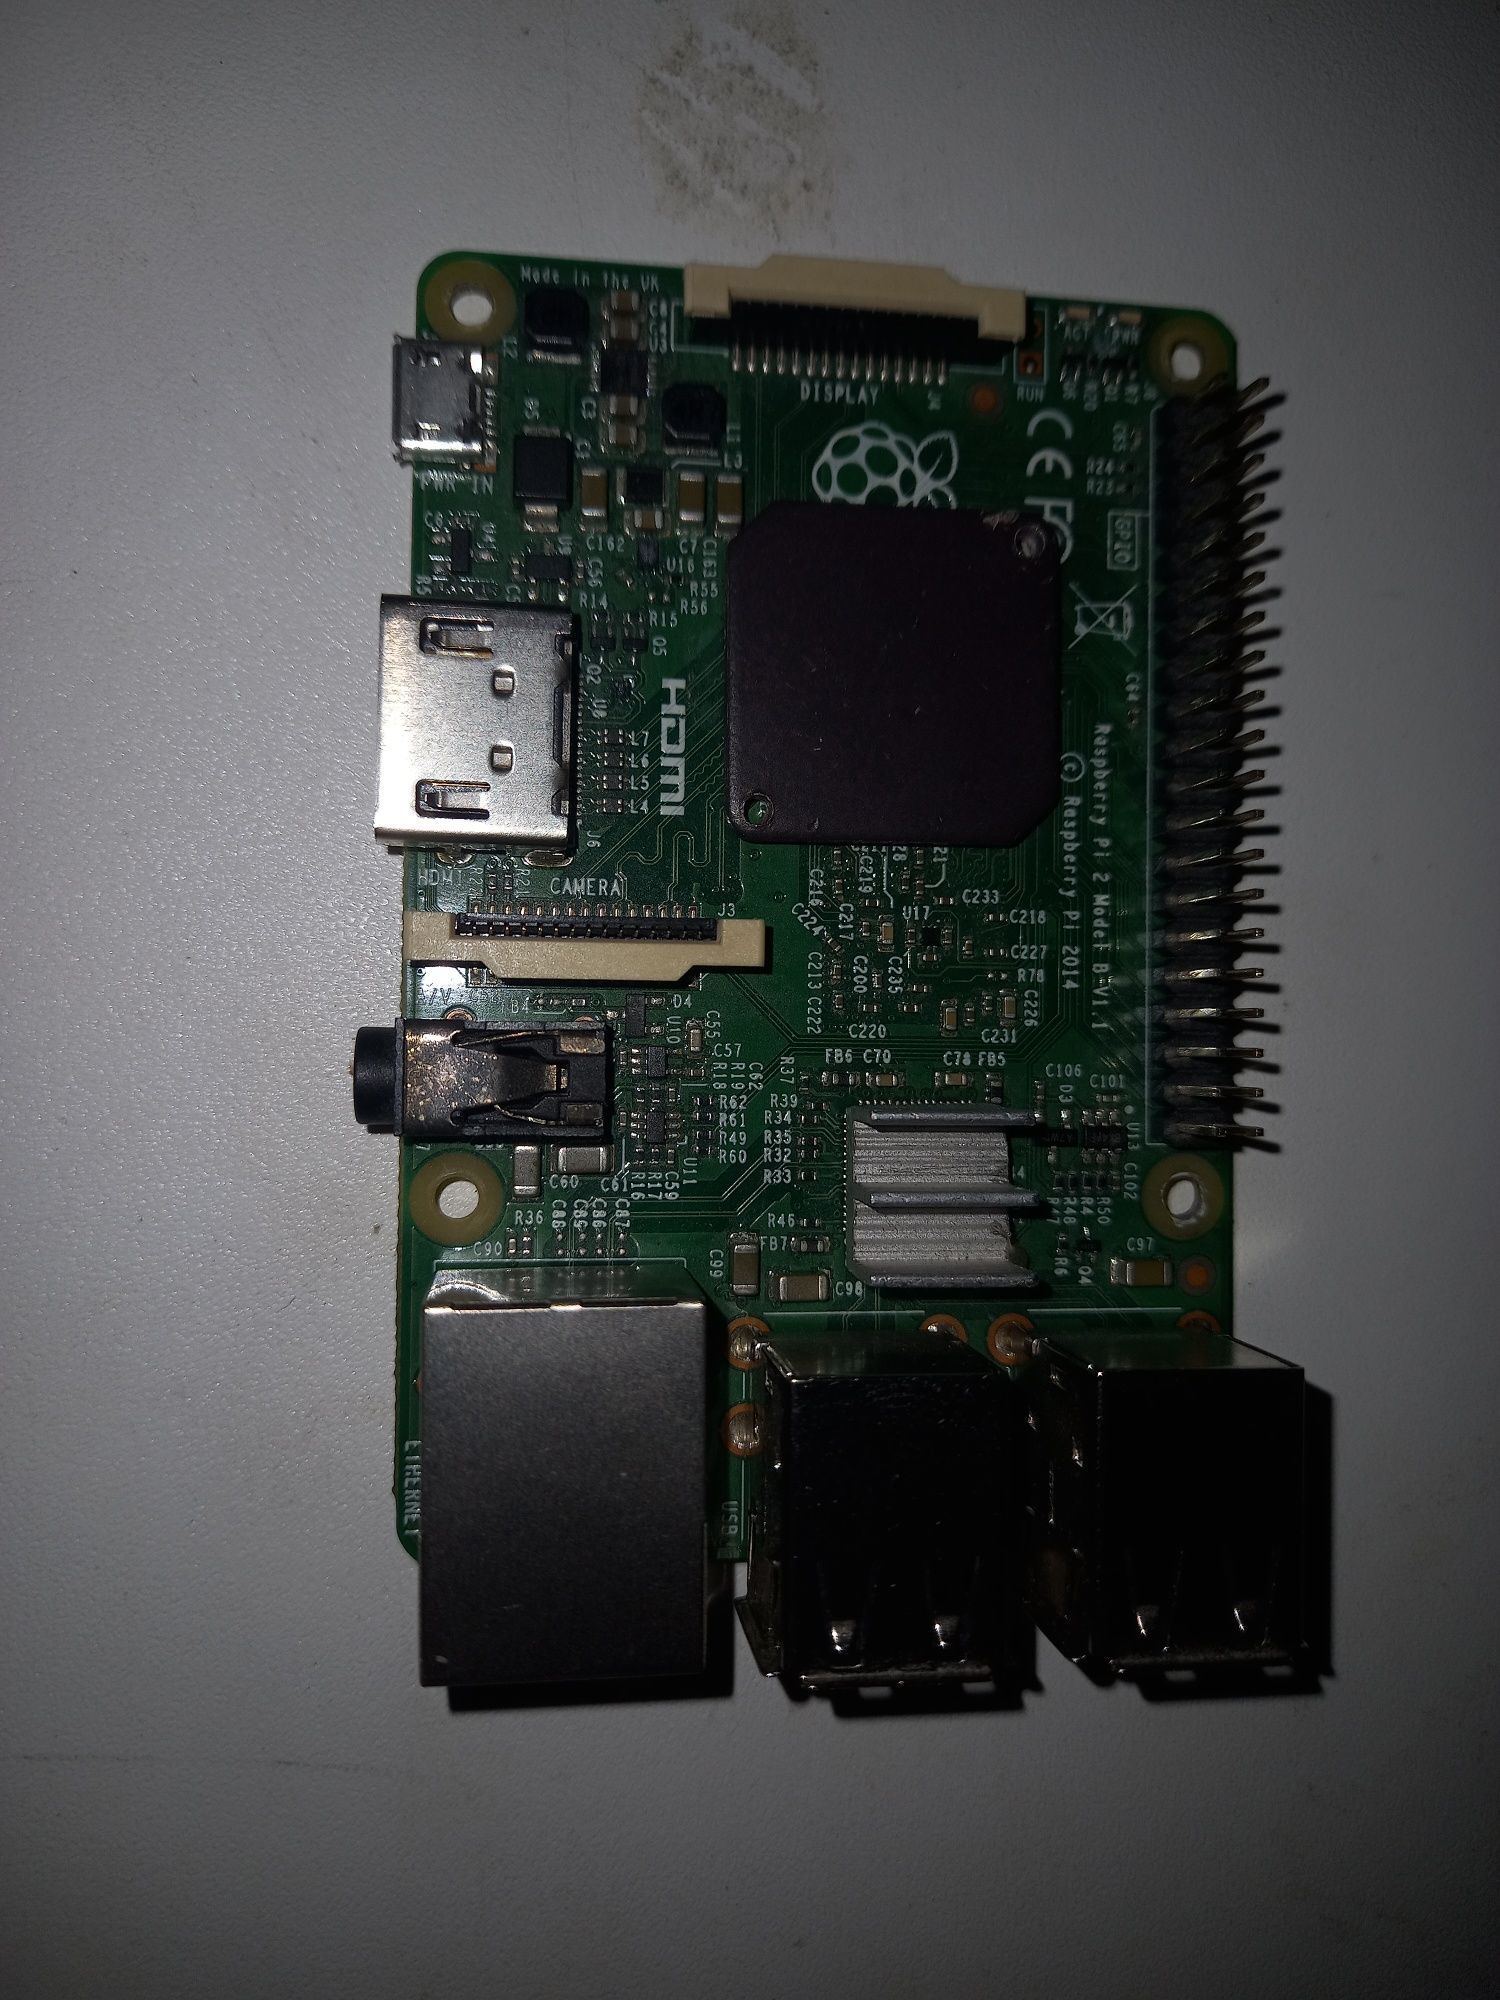 Raspberry Pi 2 v1.1